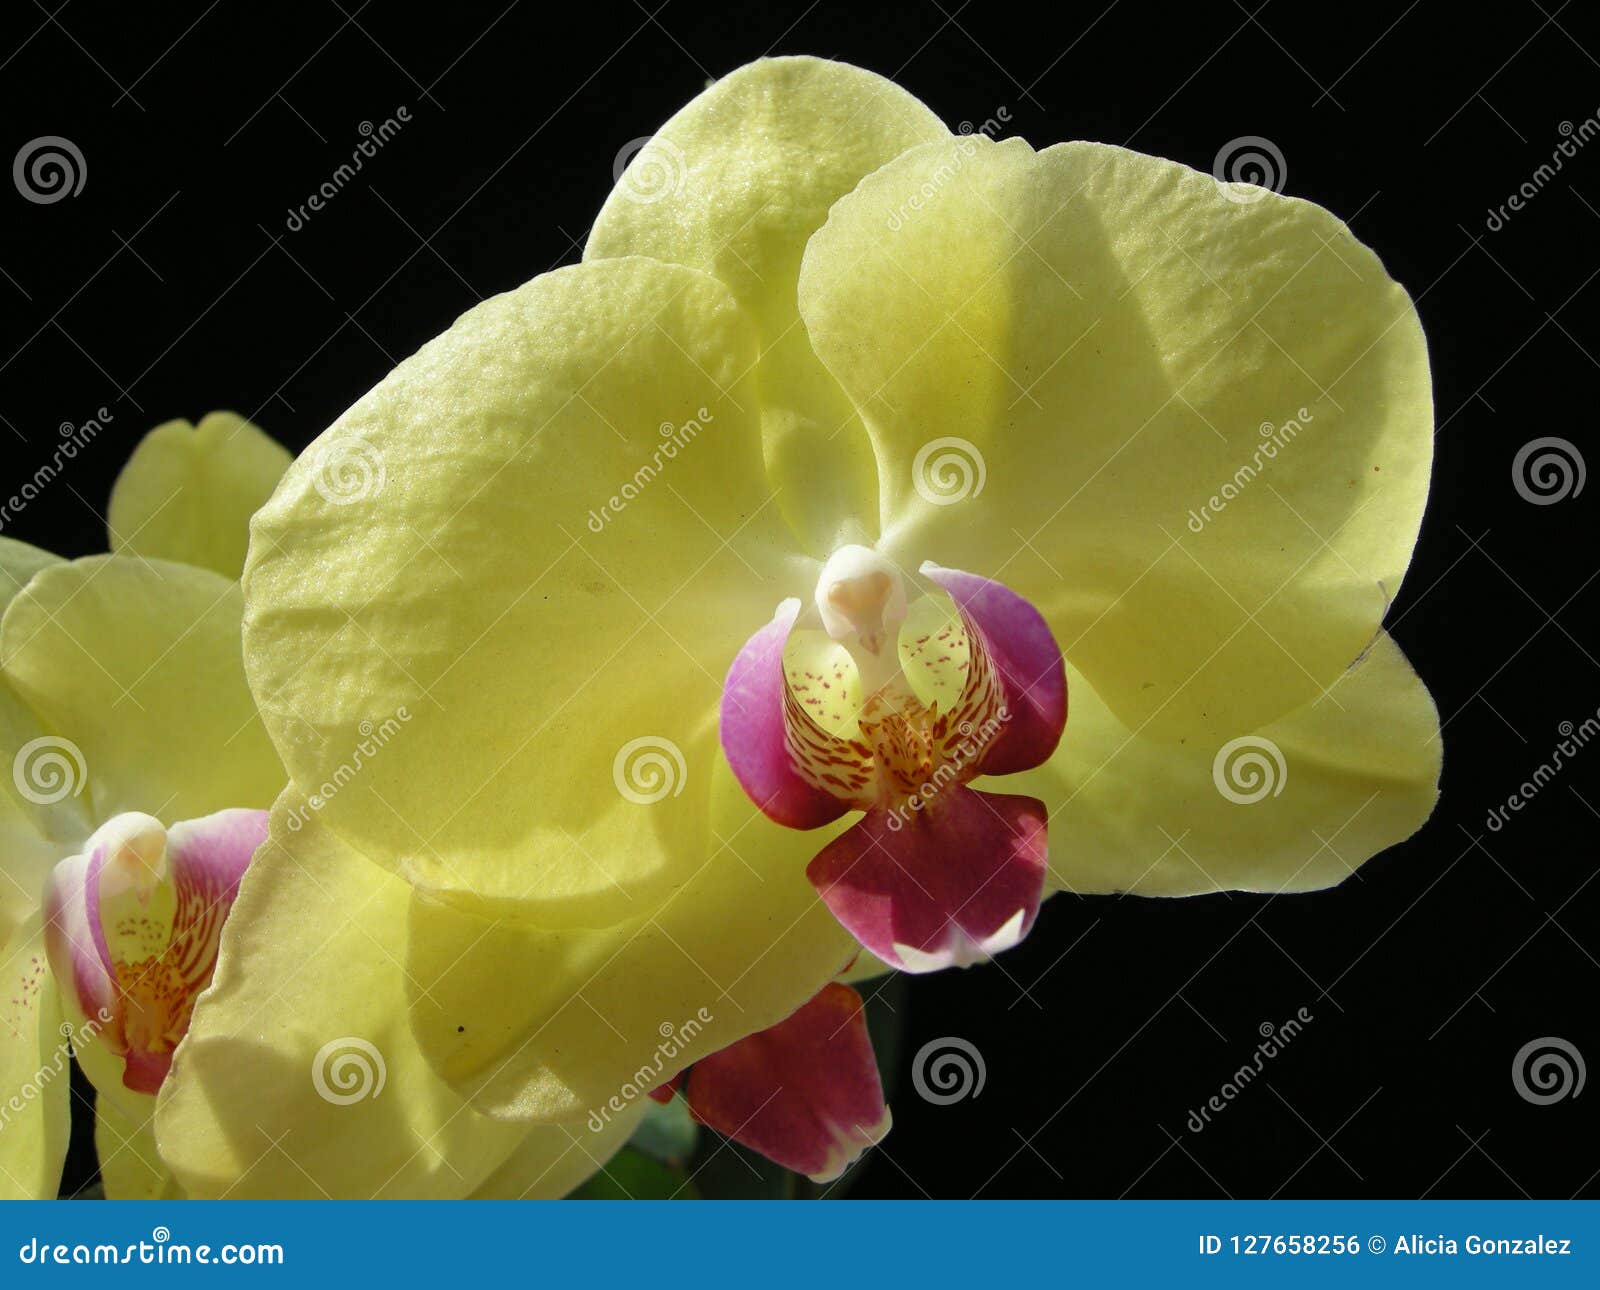 orchid phaleanopsis yellow fucsia center